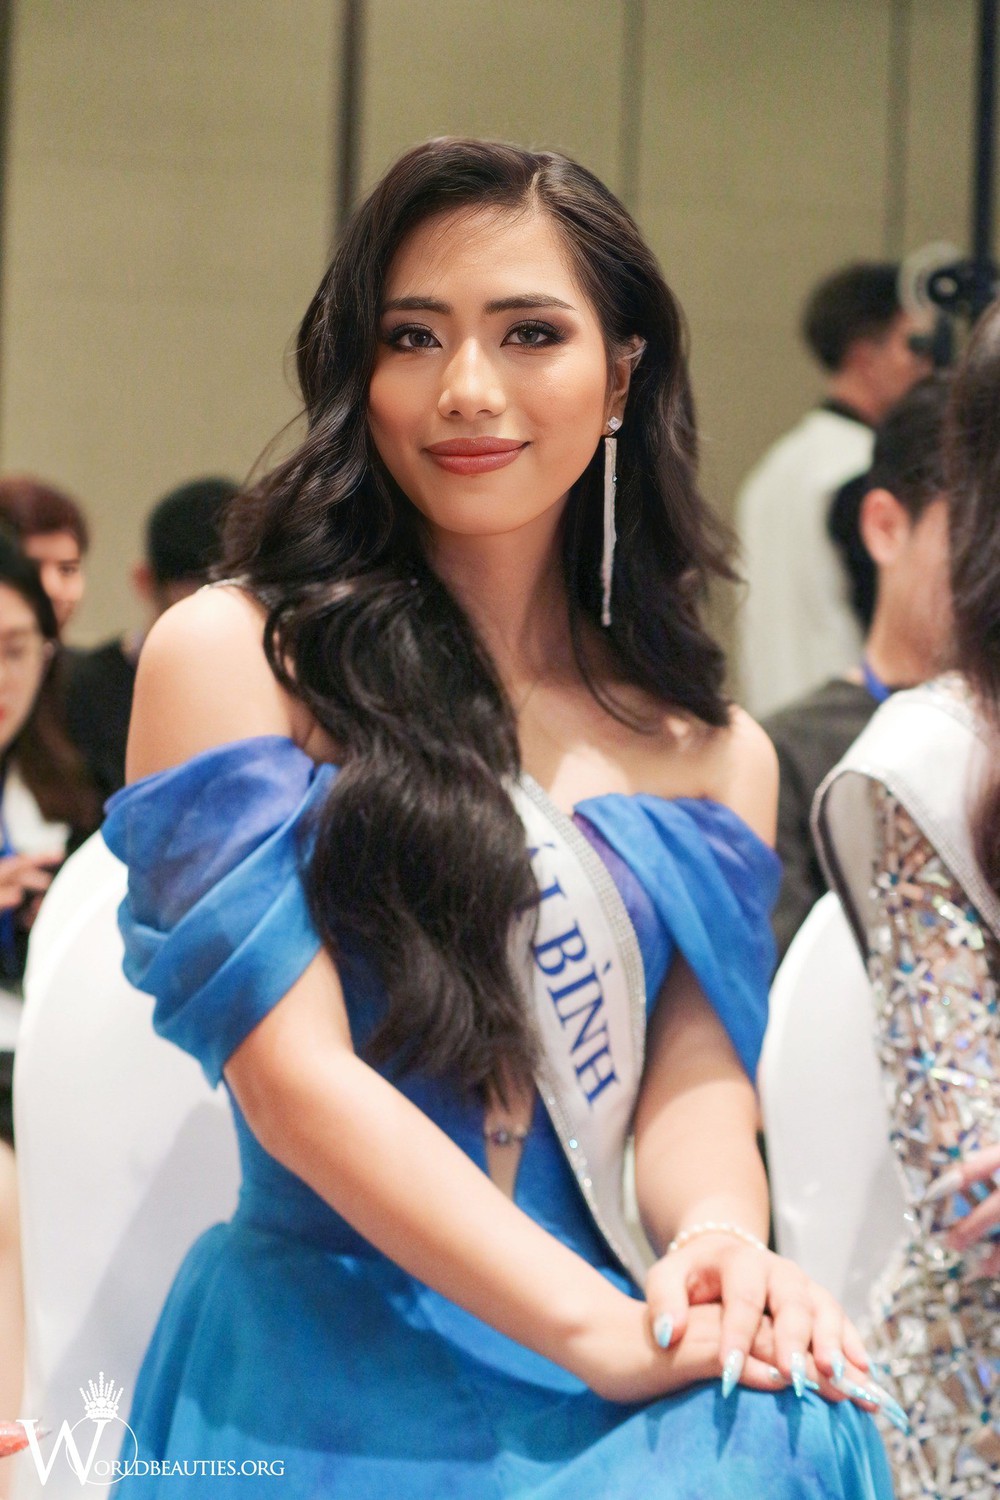 Cận nhan sắc top 18 Miss Universe Vietnam - Ảnh 13.